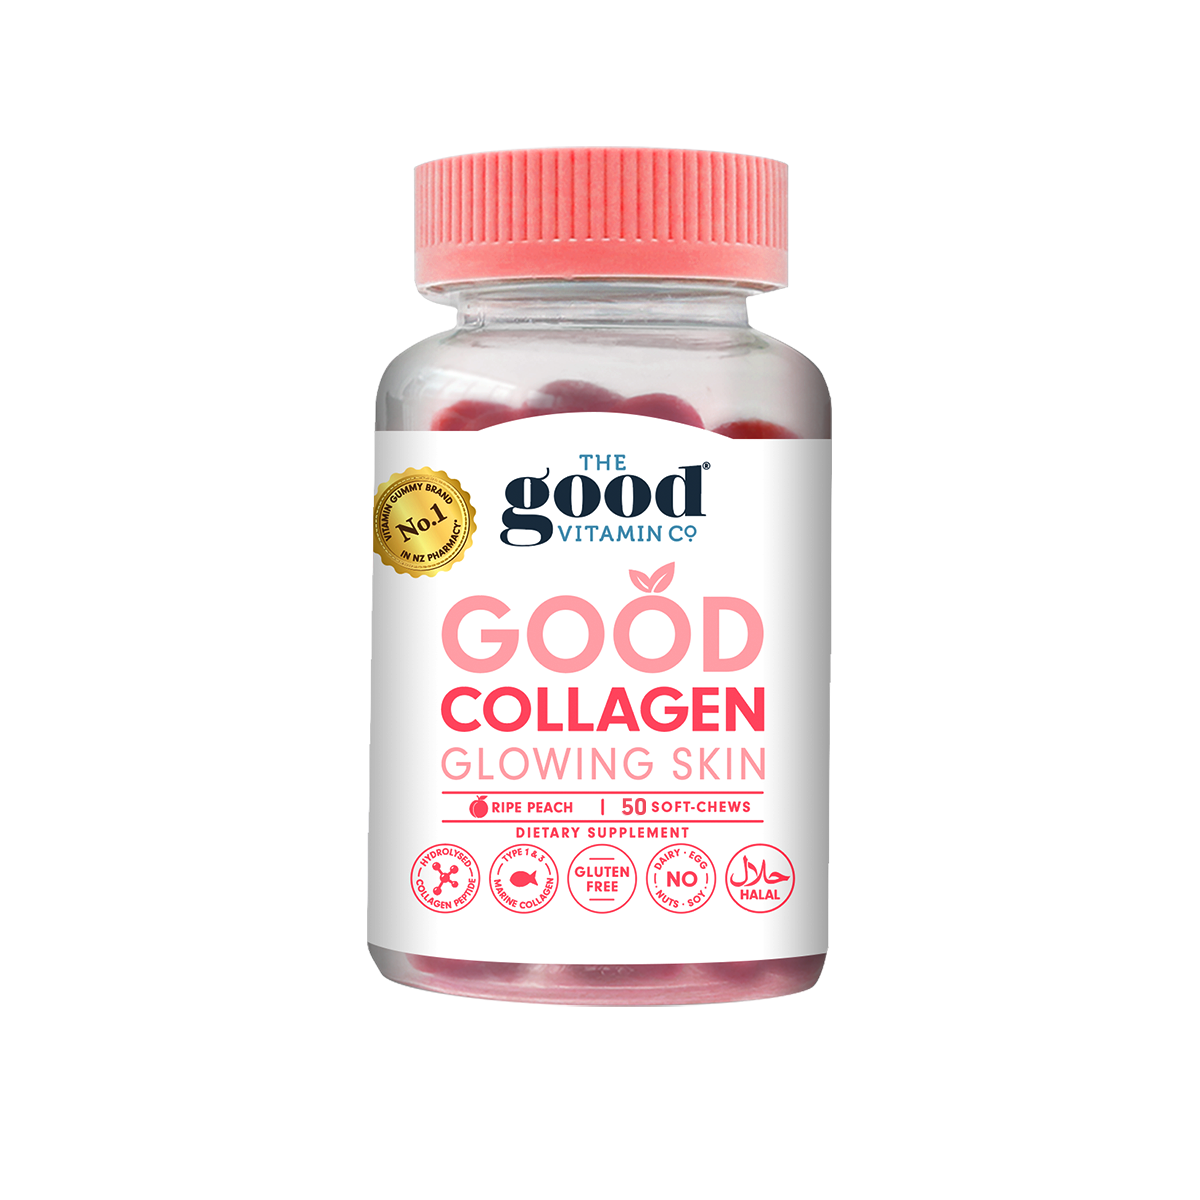 The Good Vitamin CO. Good Collagen Glowing Skin 50 Soft-Chews.